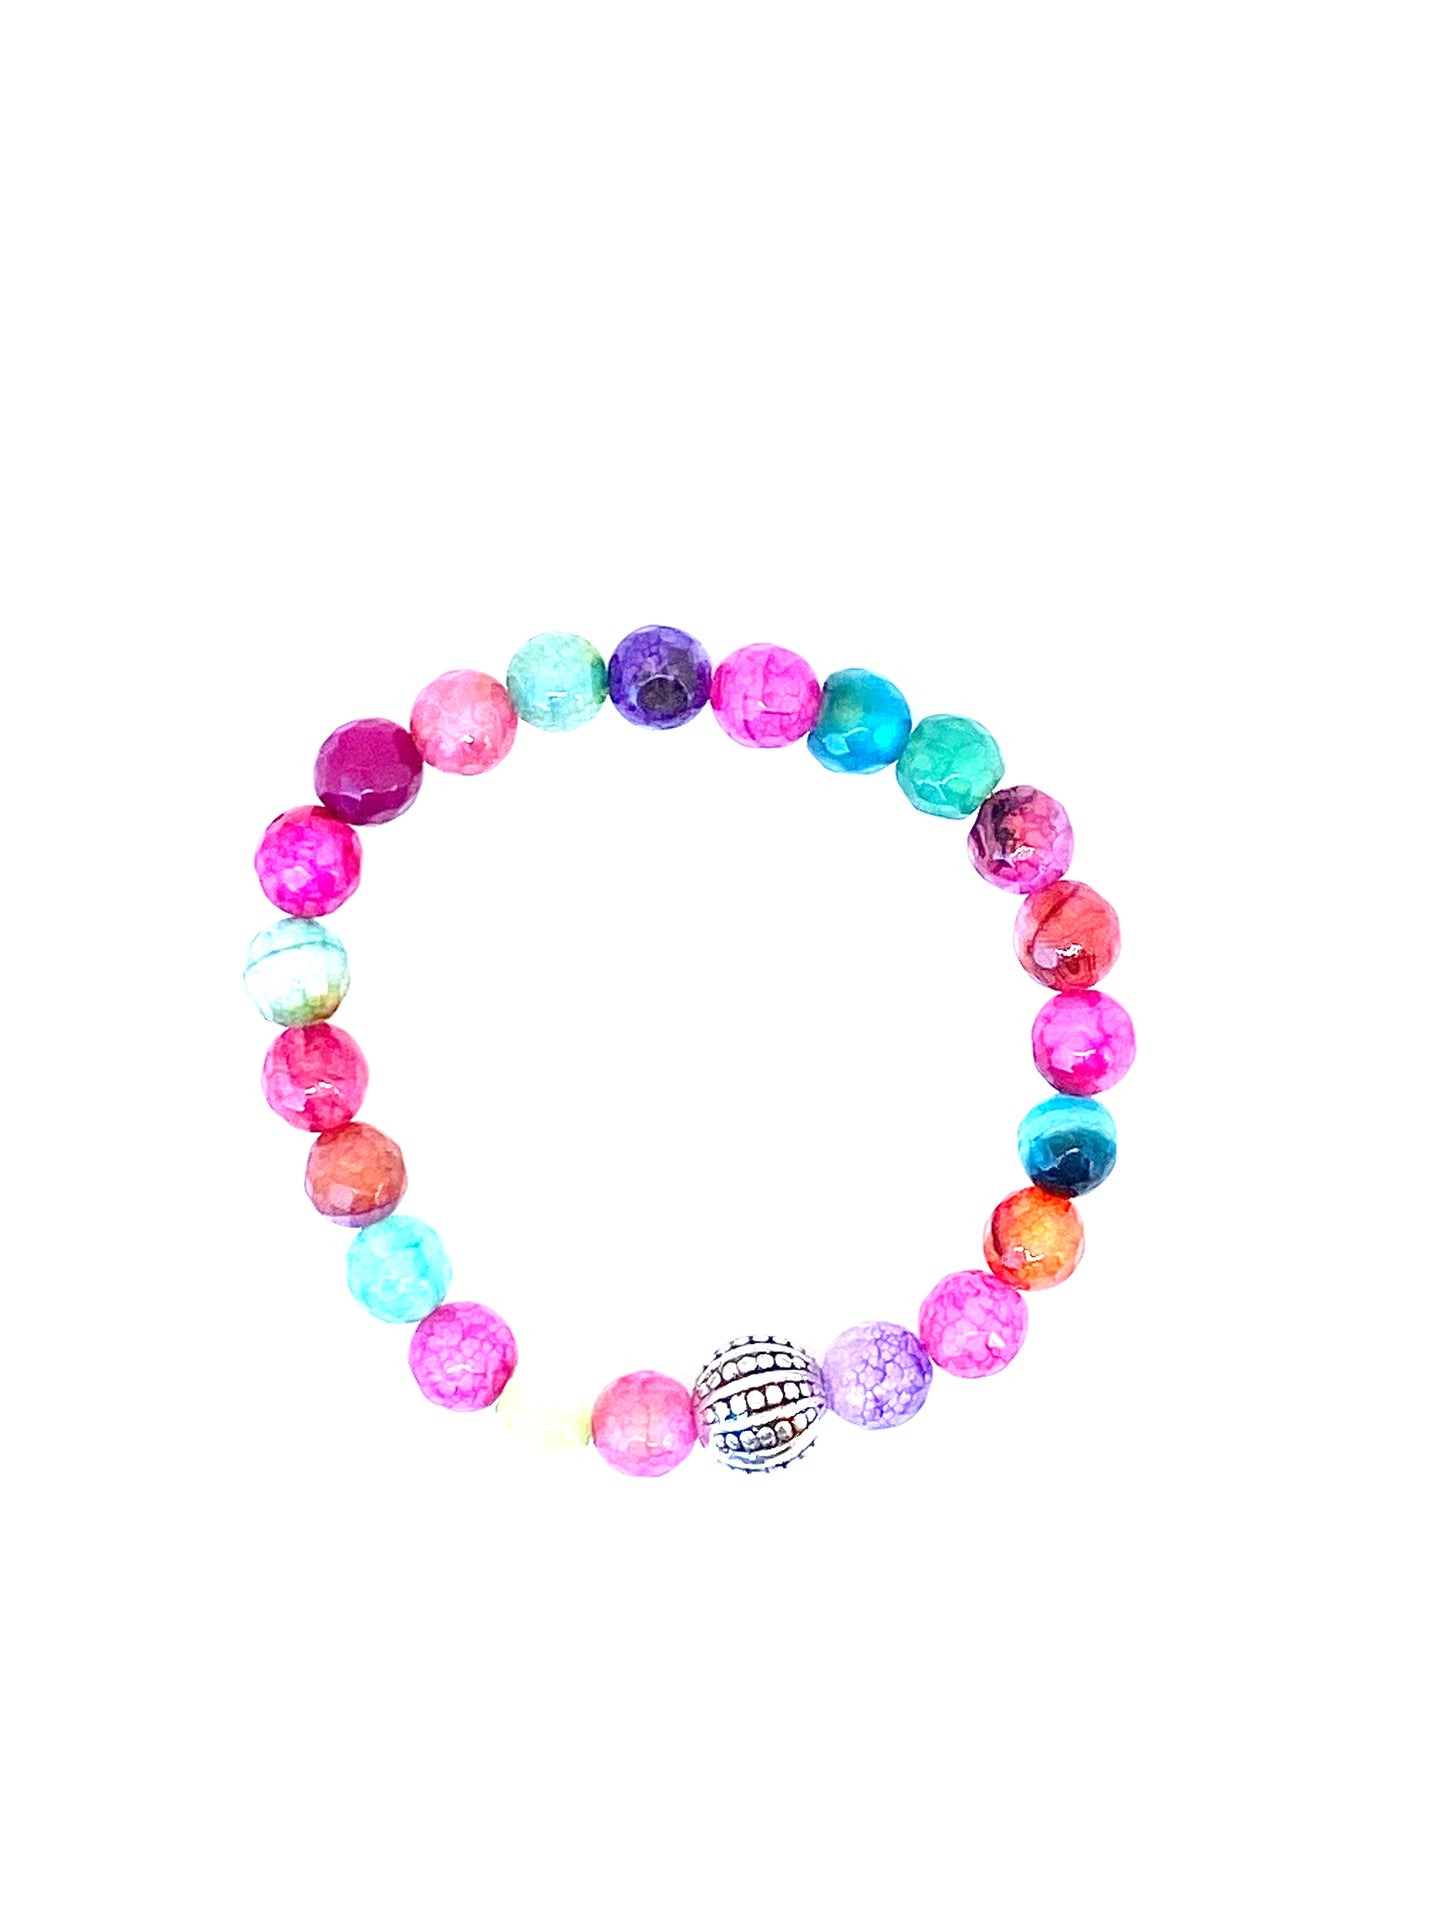 Agate Rainbow Mala Bracelet - Faceted Gemstones